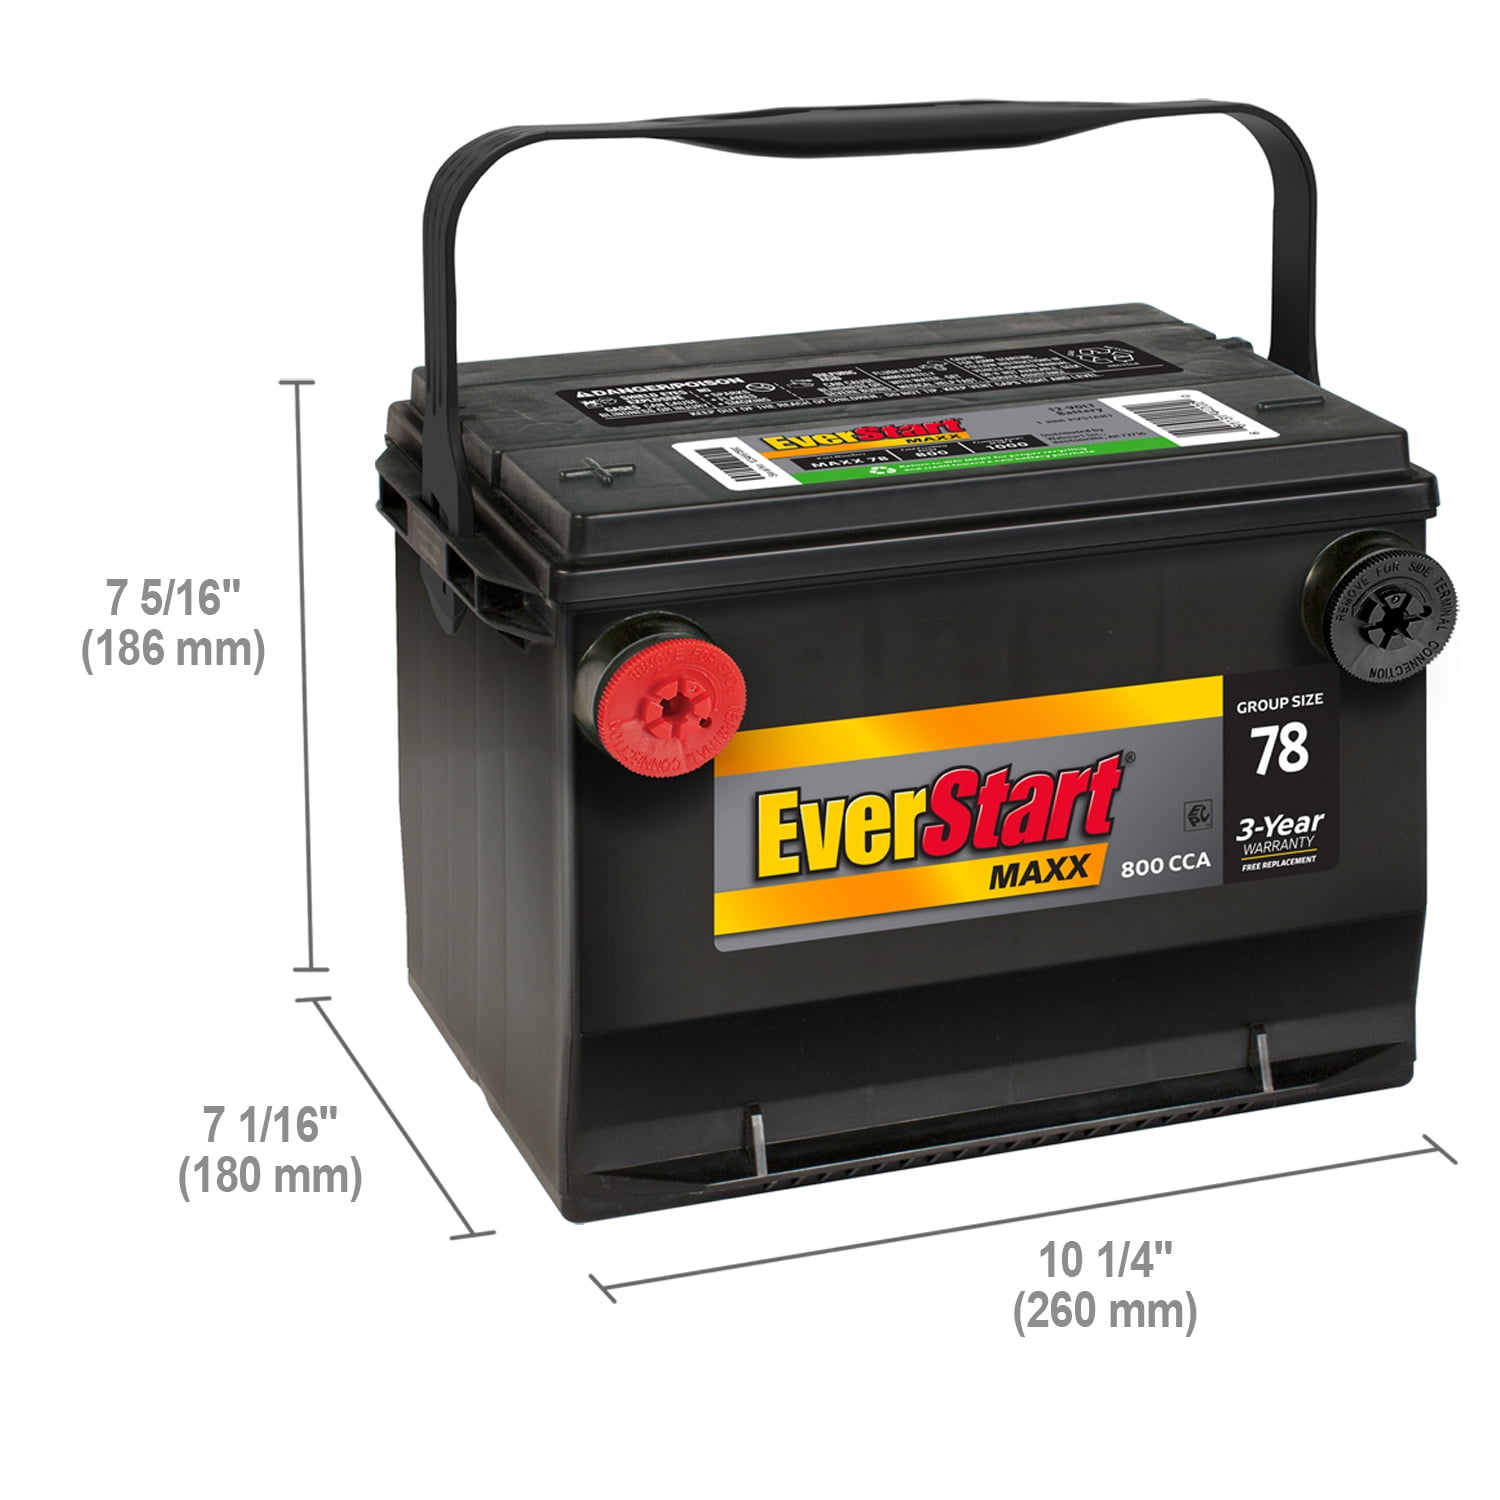 EverStart Maxx Lead Acid Automotive Battery, Group Size 78N (12 Volt/800  CCA) 